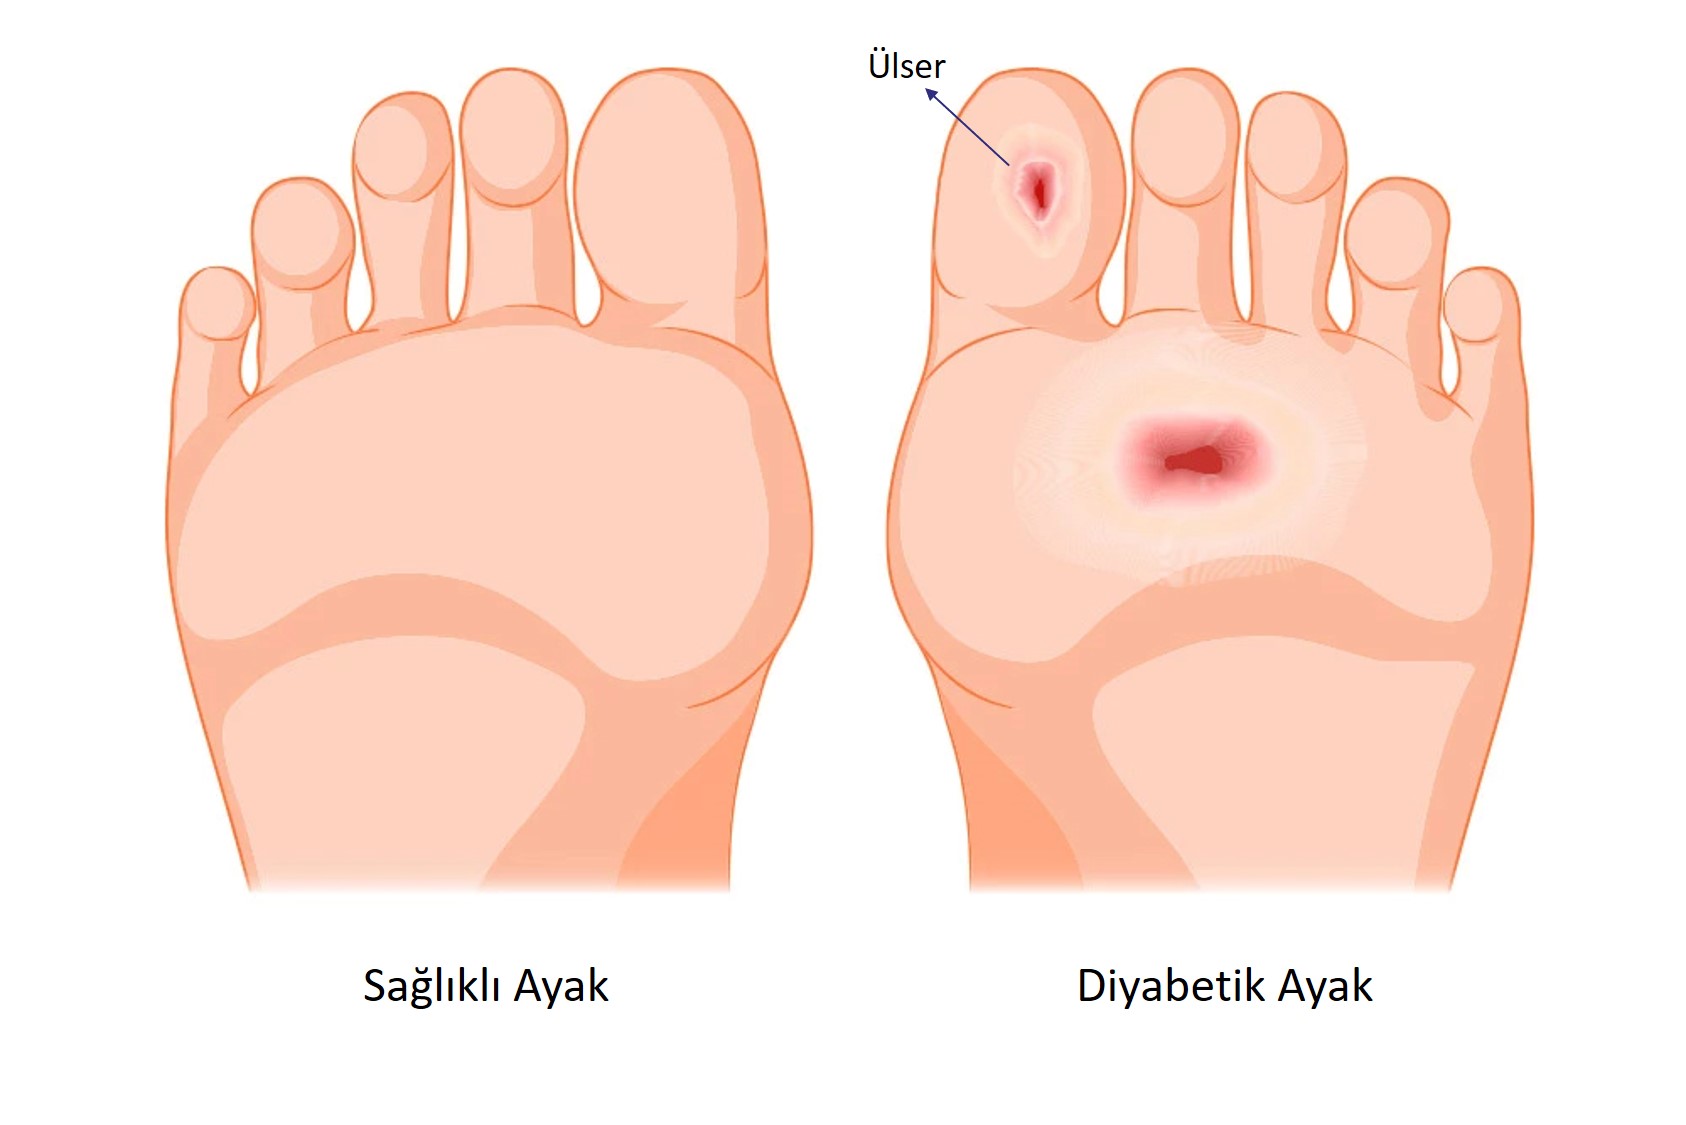 Diabetes based Ulcer Scars on Feet